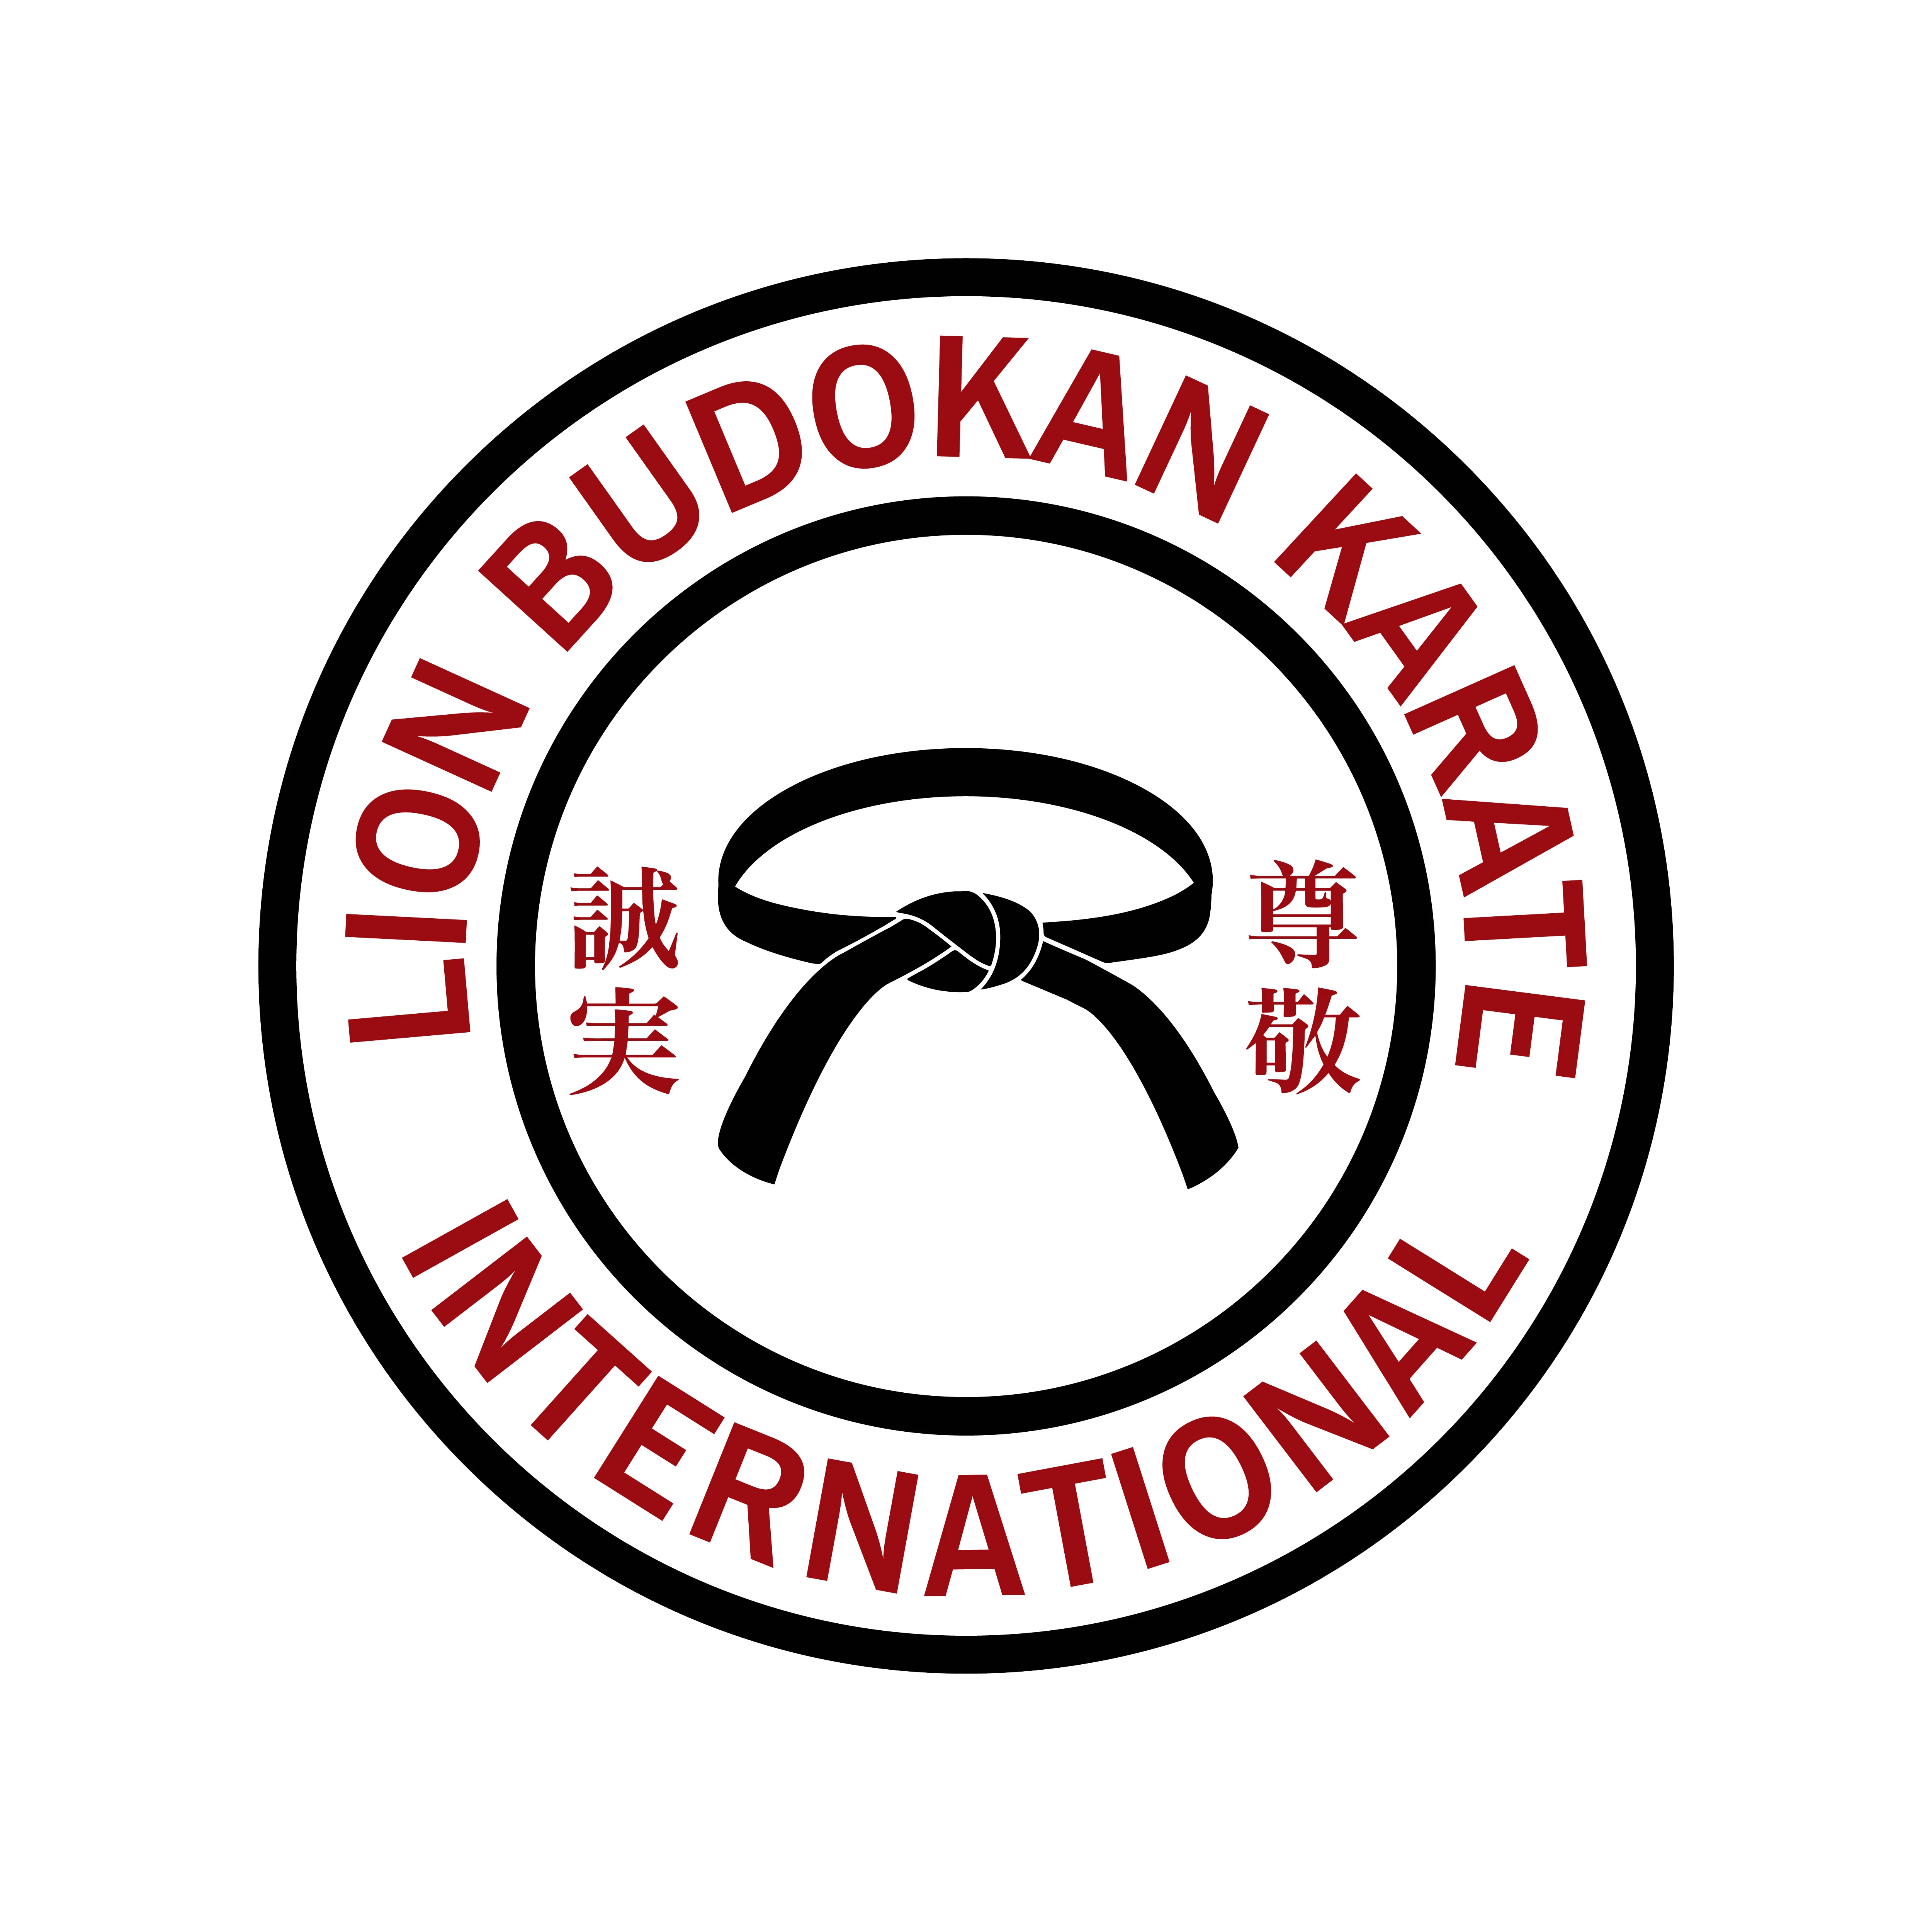 Lion Budokan Karate International